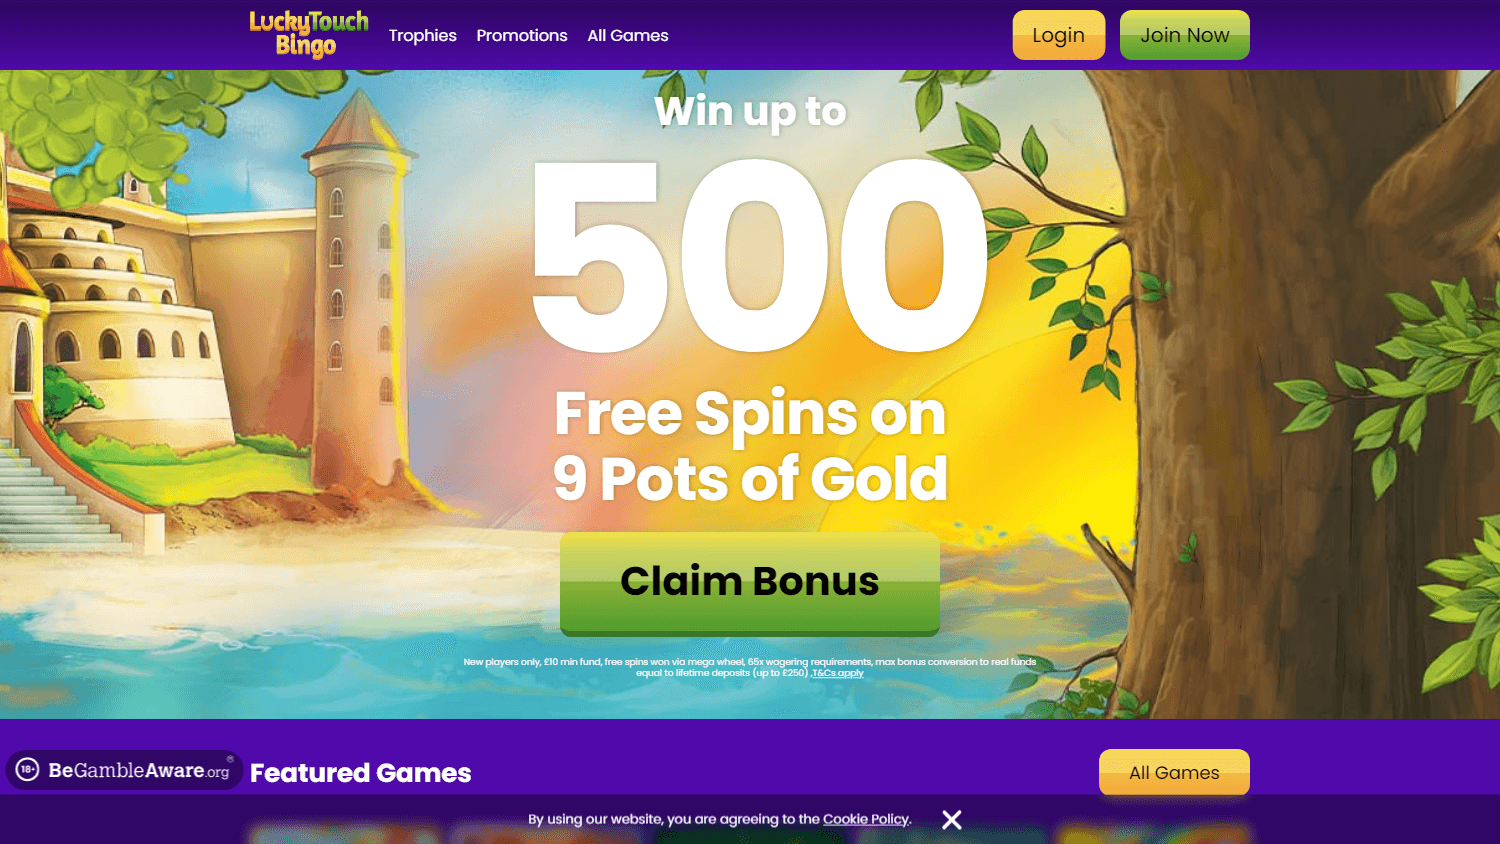 lucky_touch_bingo_casino_homepage_desktop